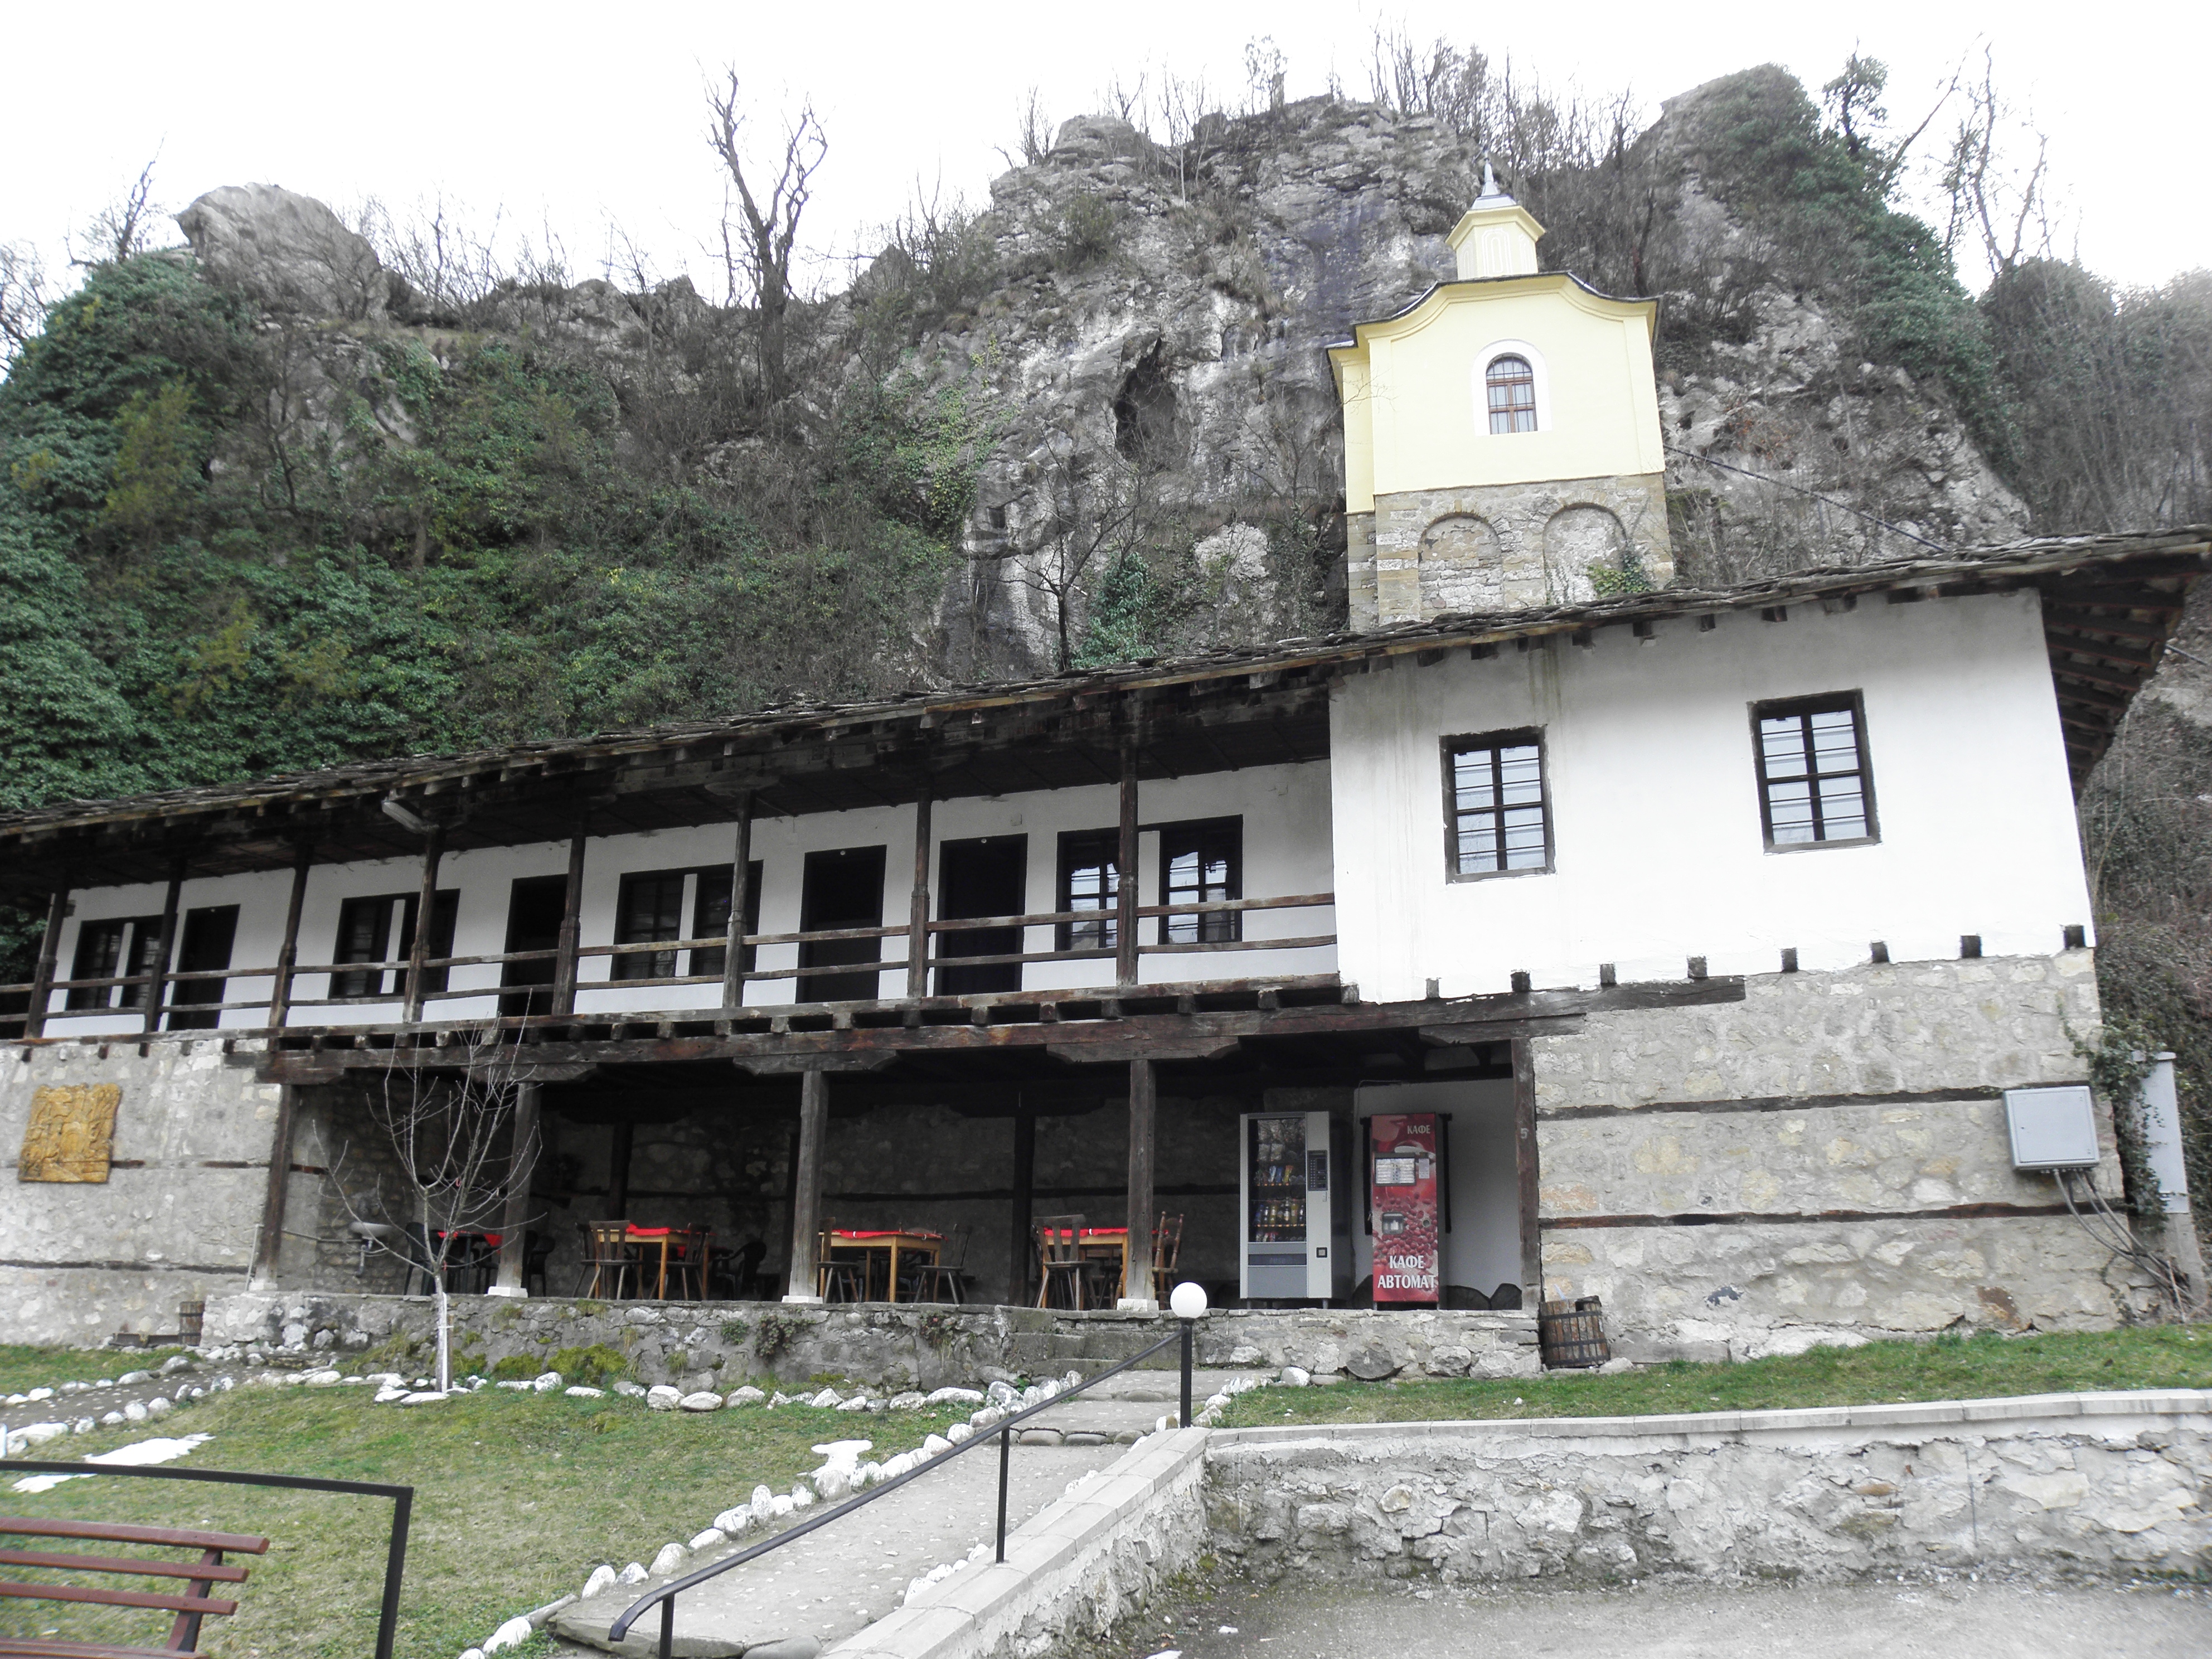 The Cherepich monastery